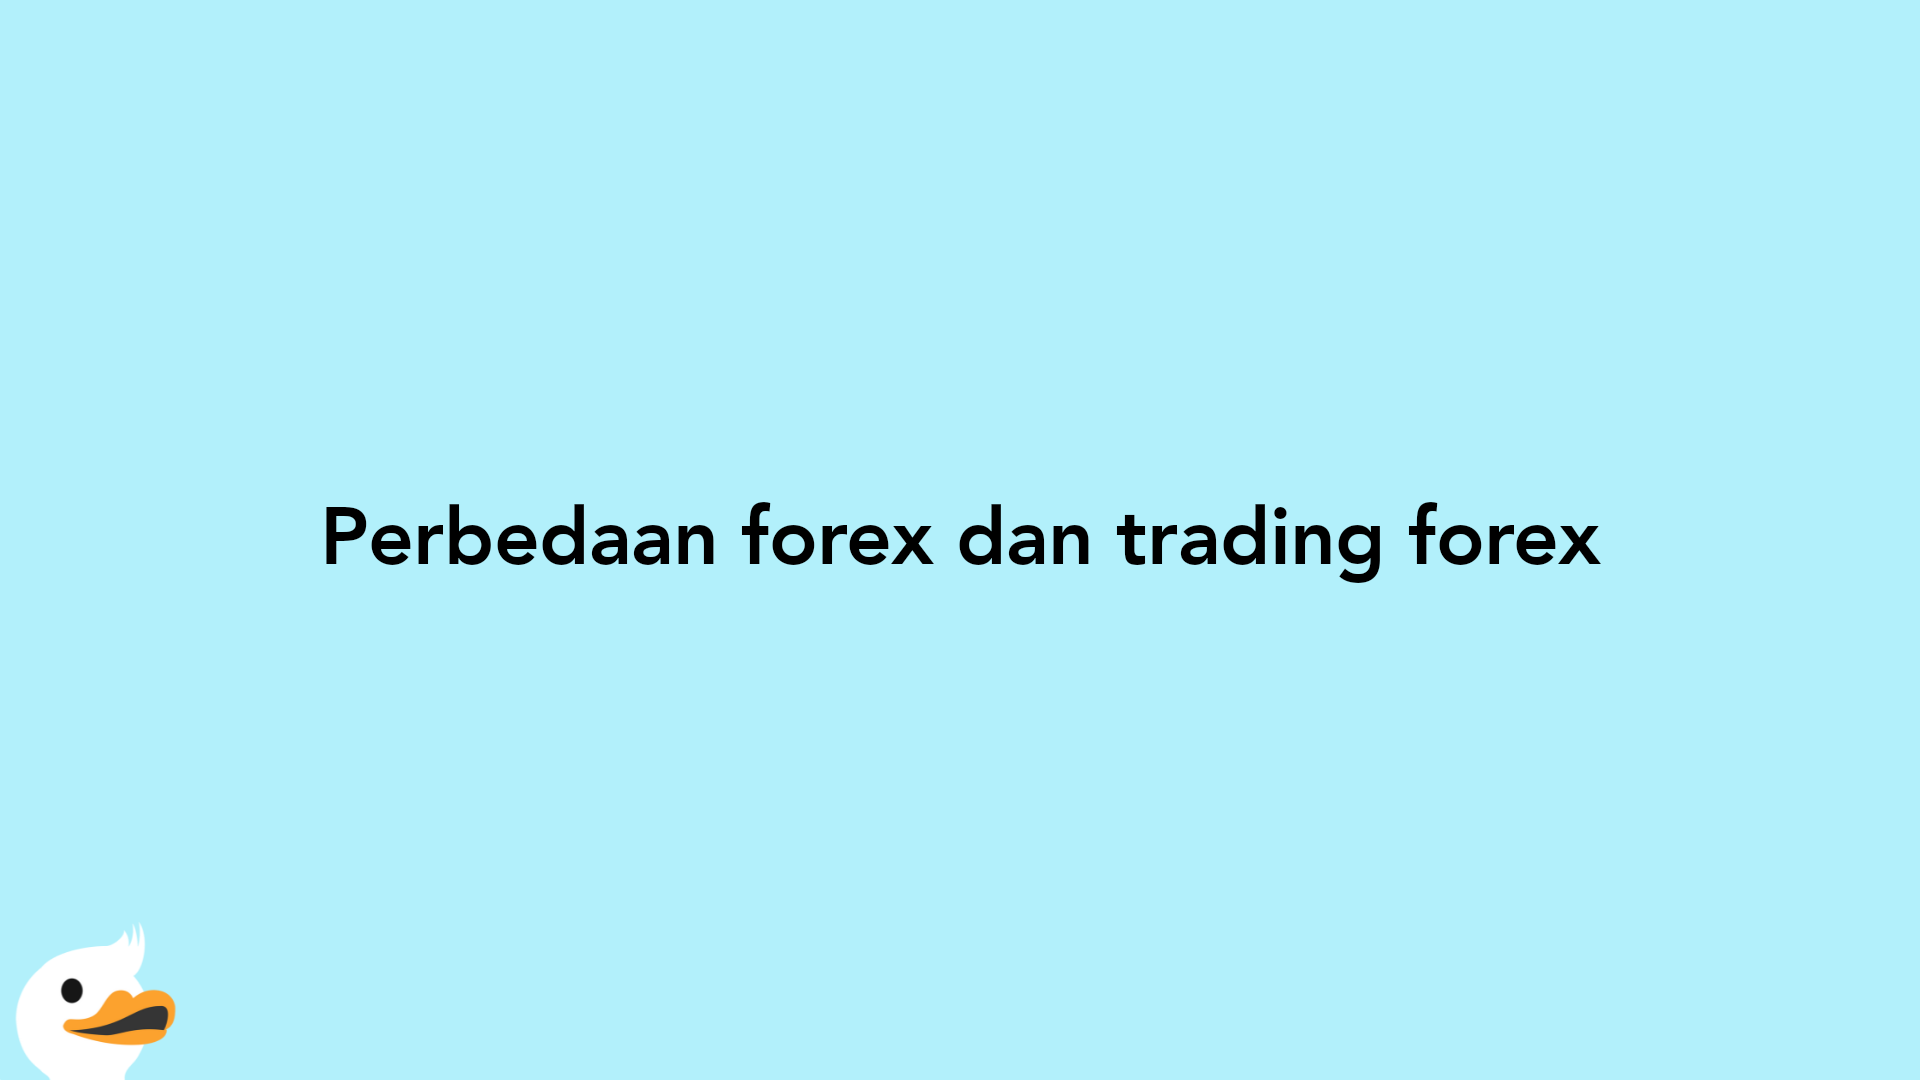 Perbedaan forex dan trading forex